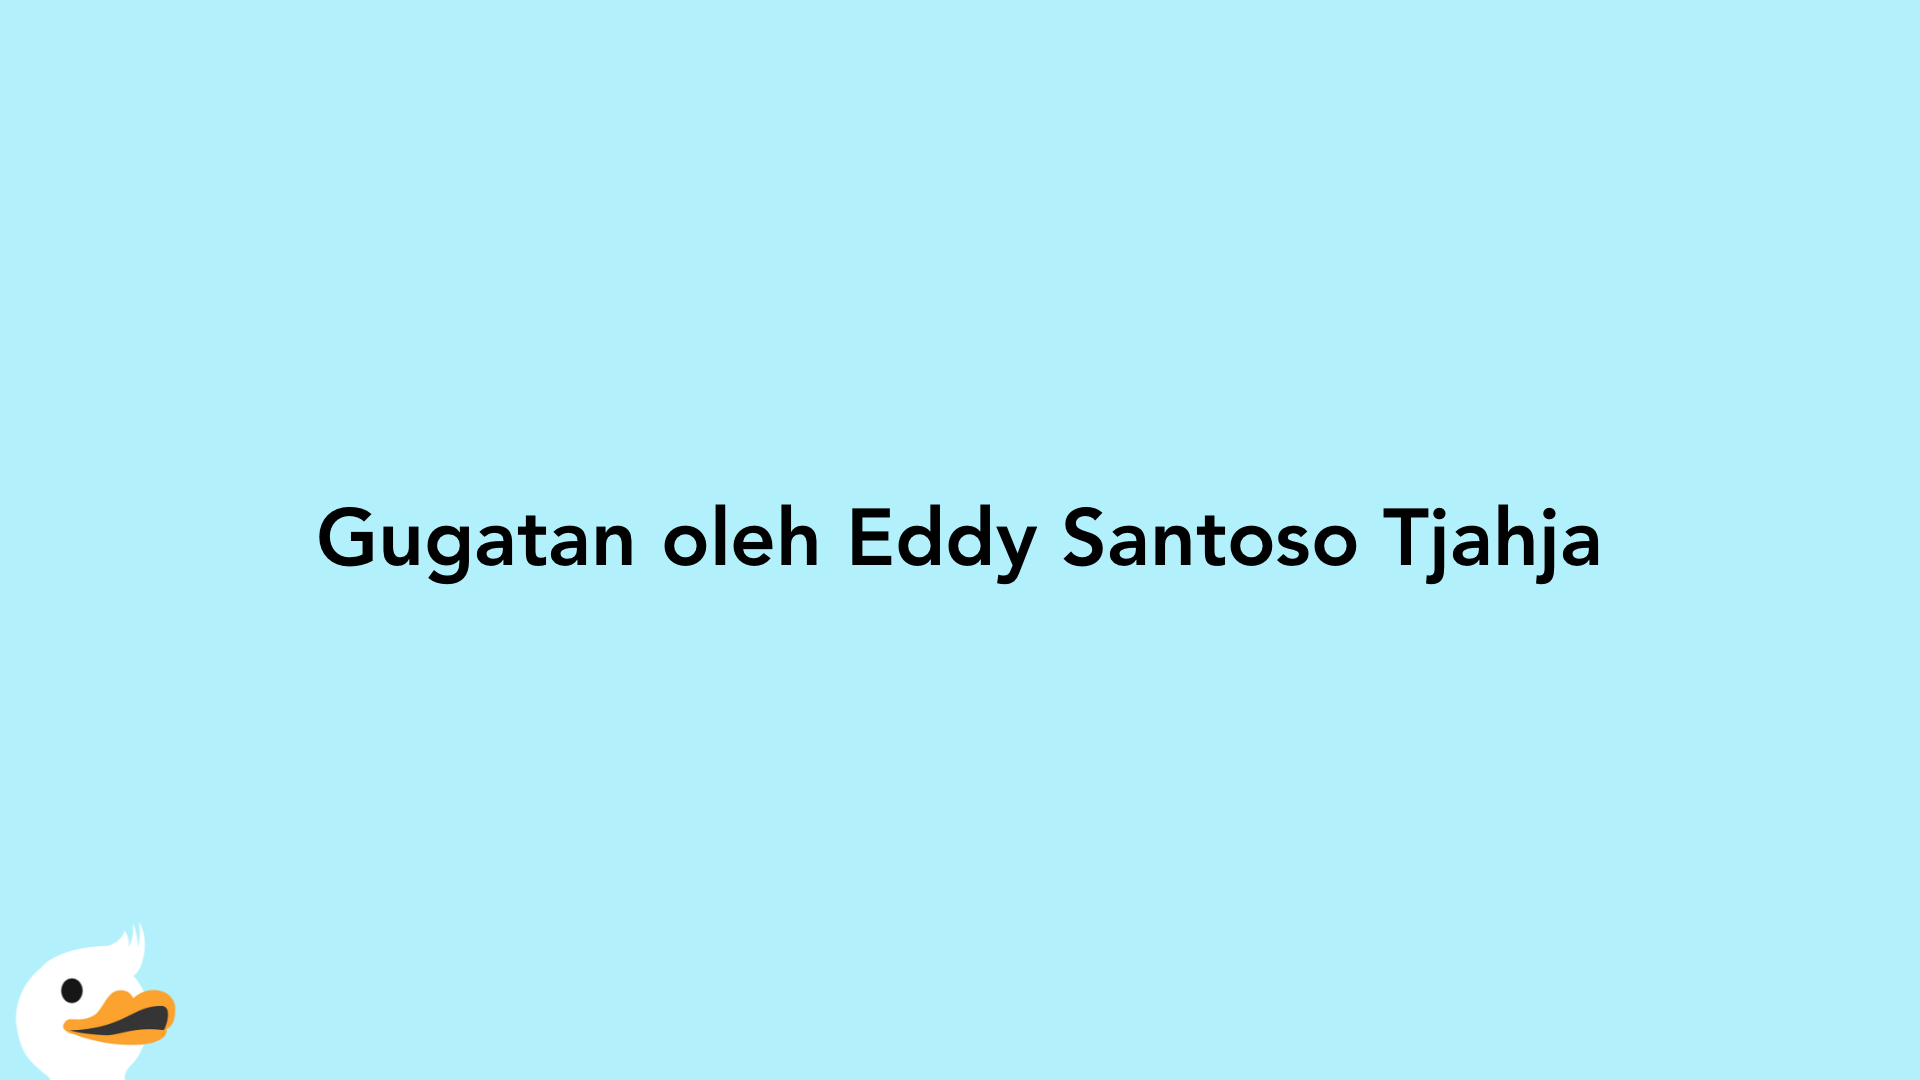 Gugatan oleh Eddy Santoso Tjahja